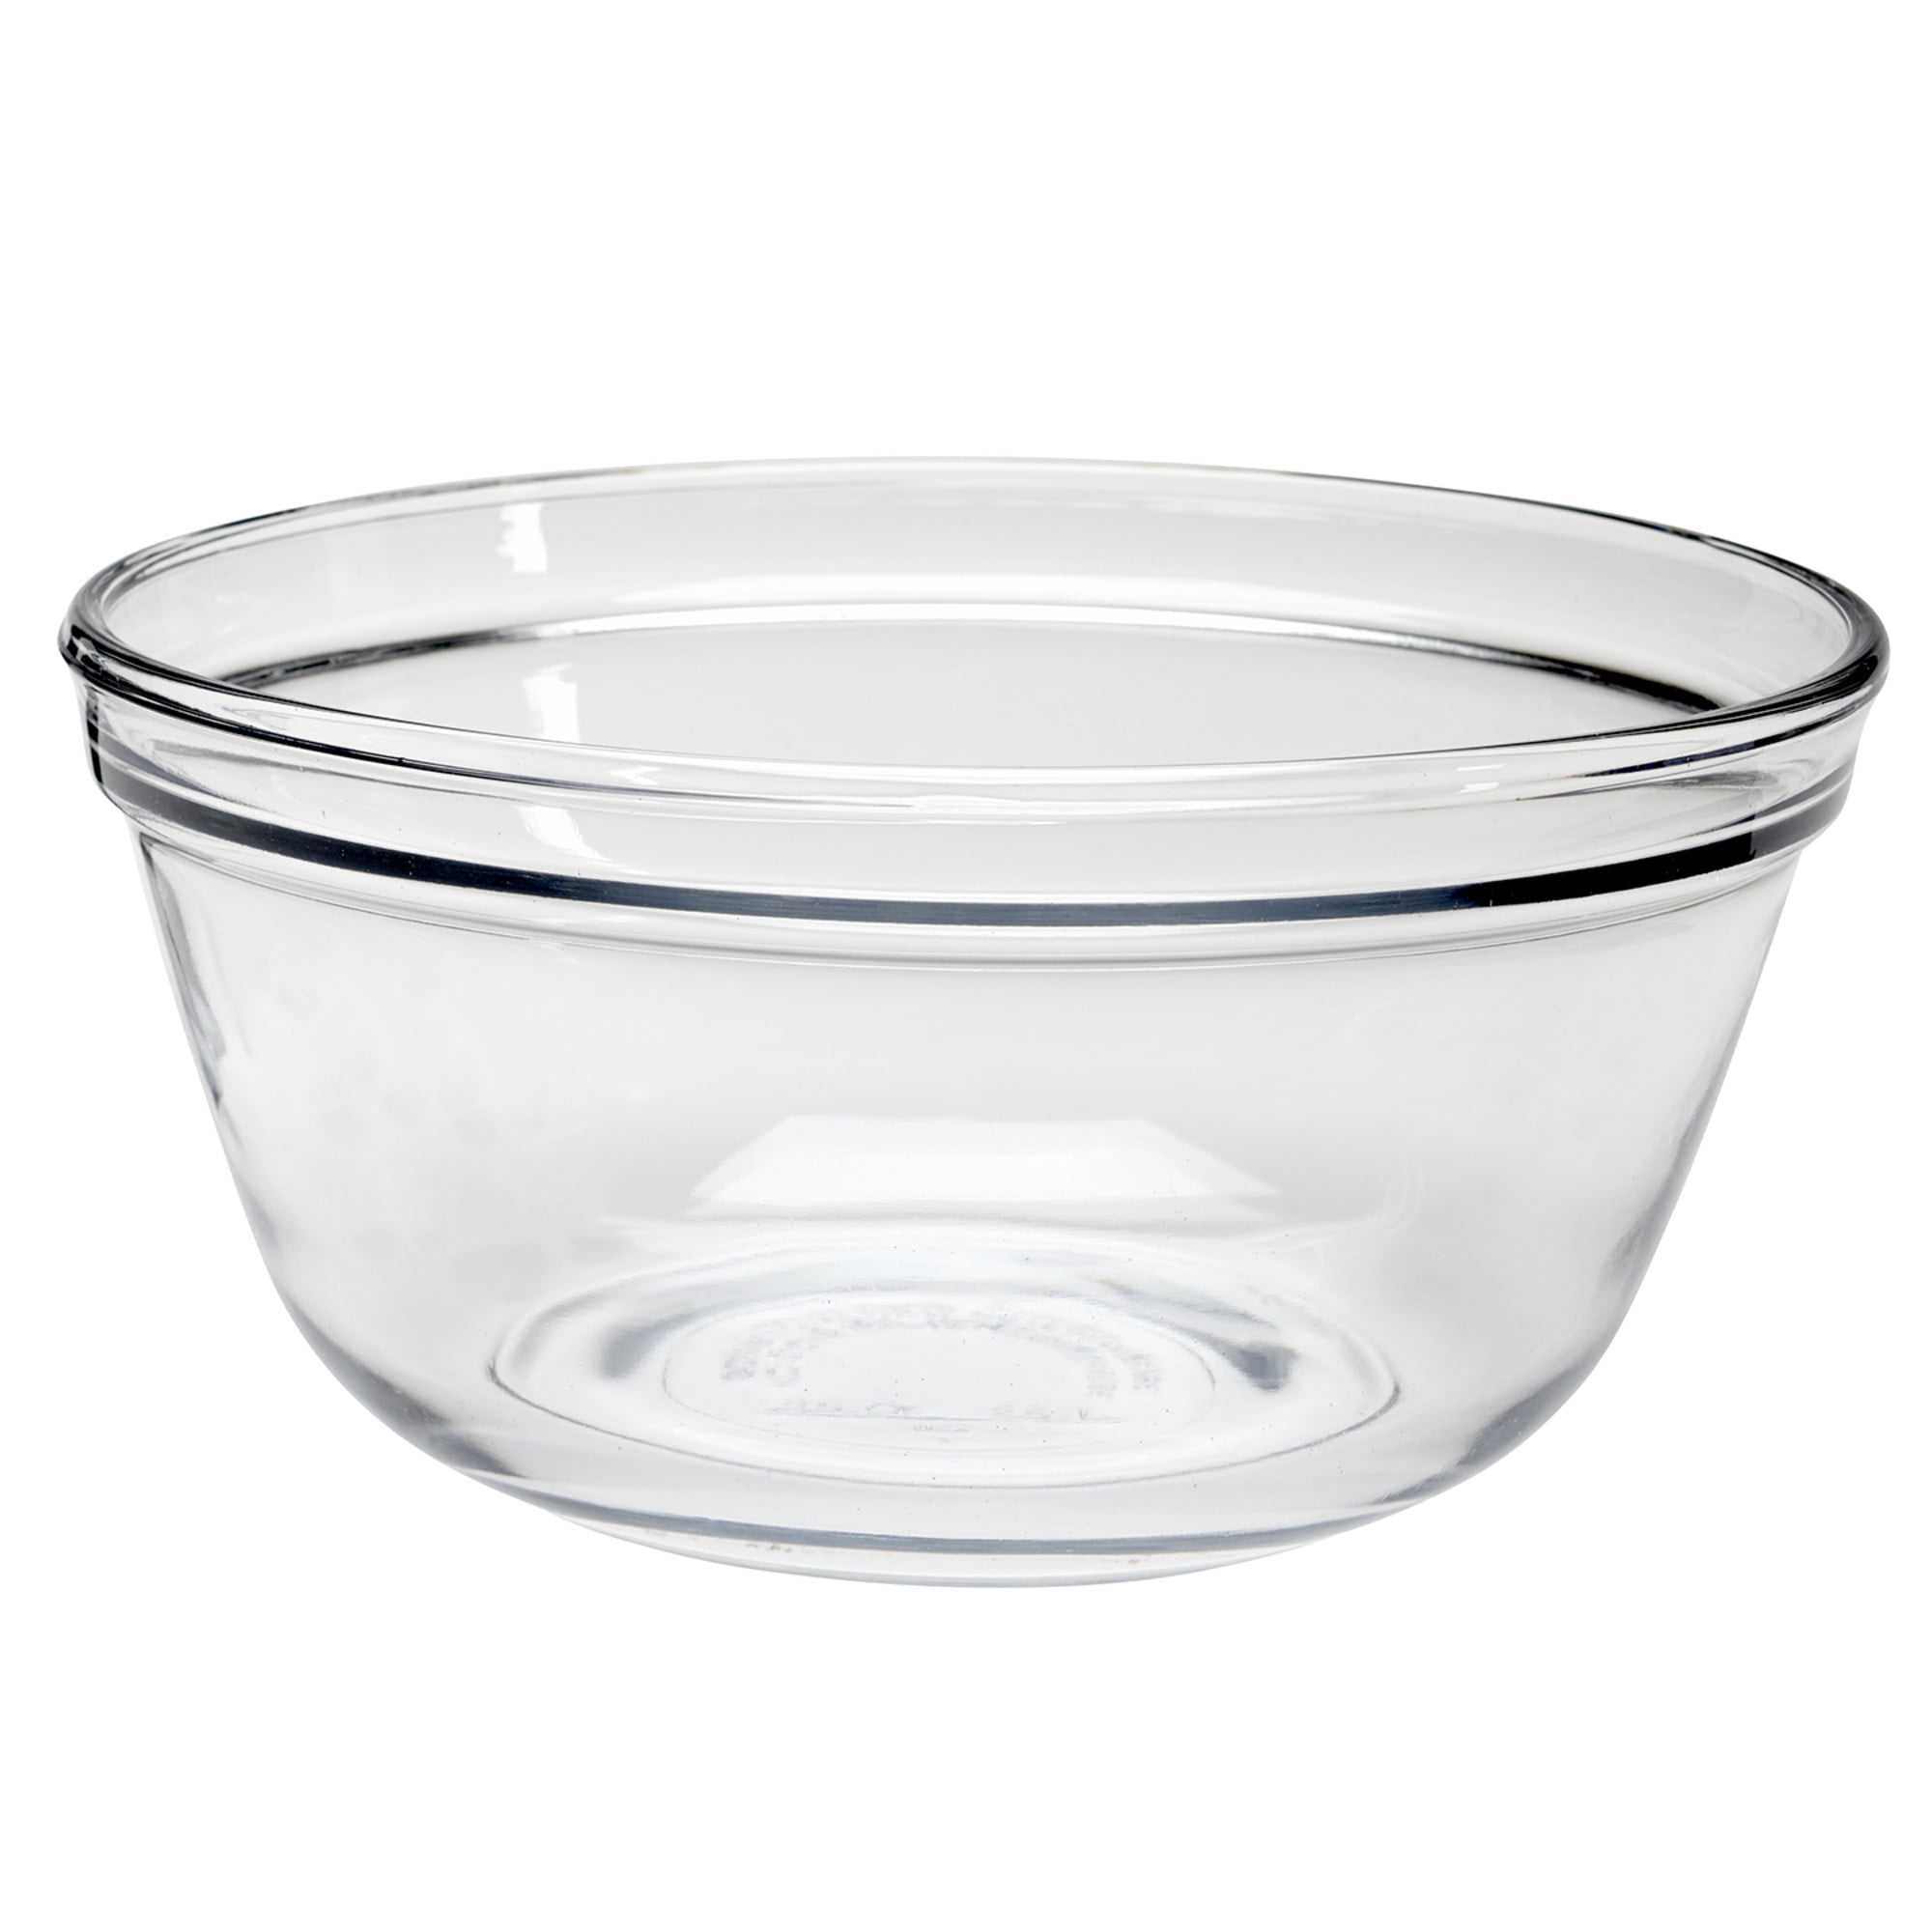 Mainstays Glass Mixing Bowl, 2.5 Quart, Clear